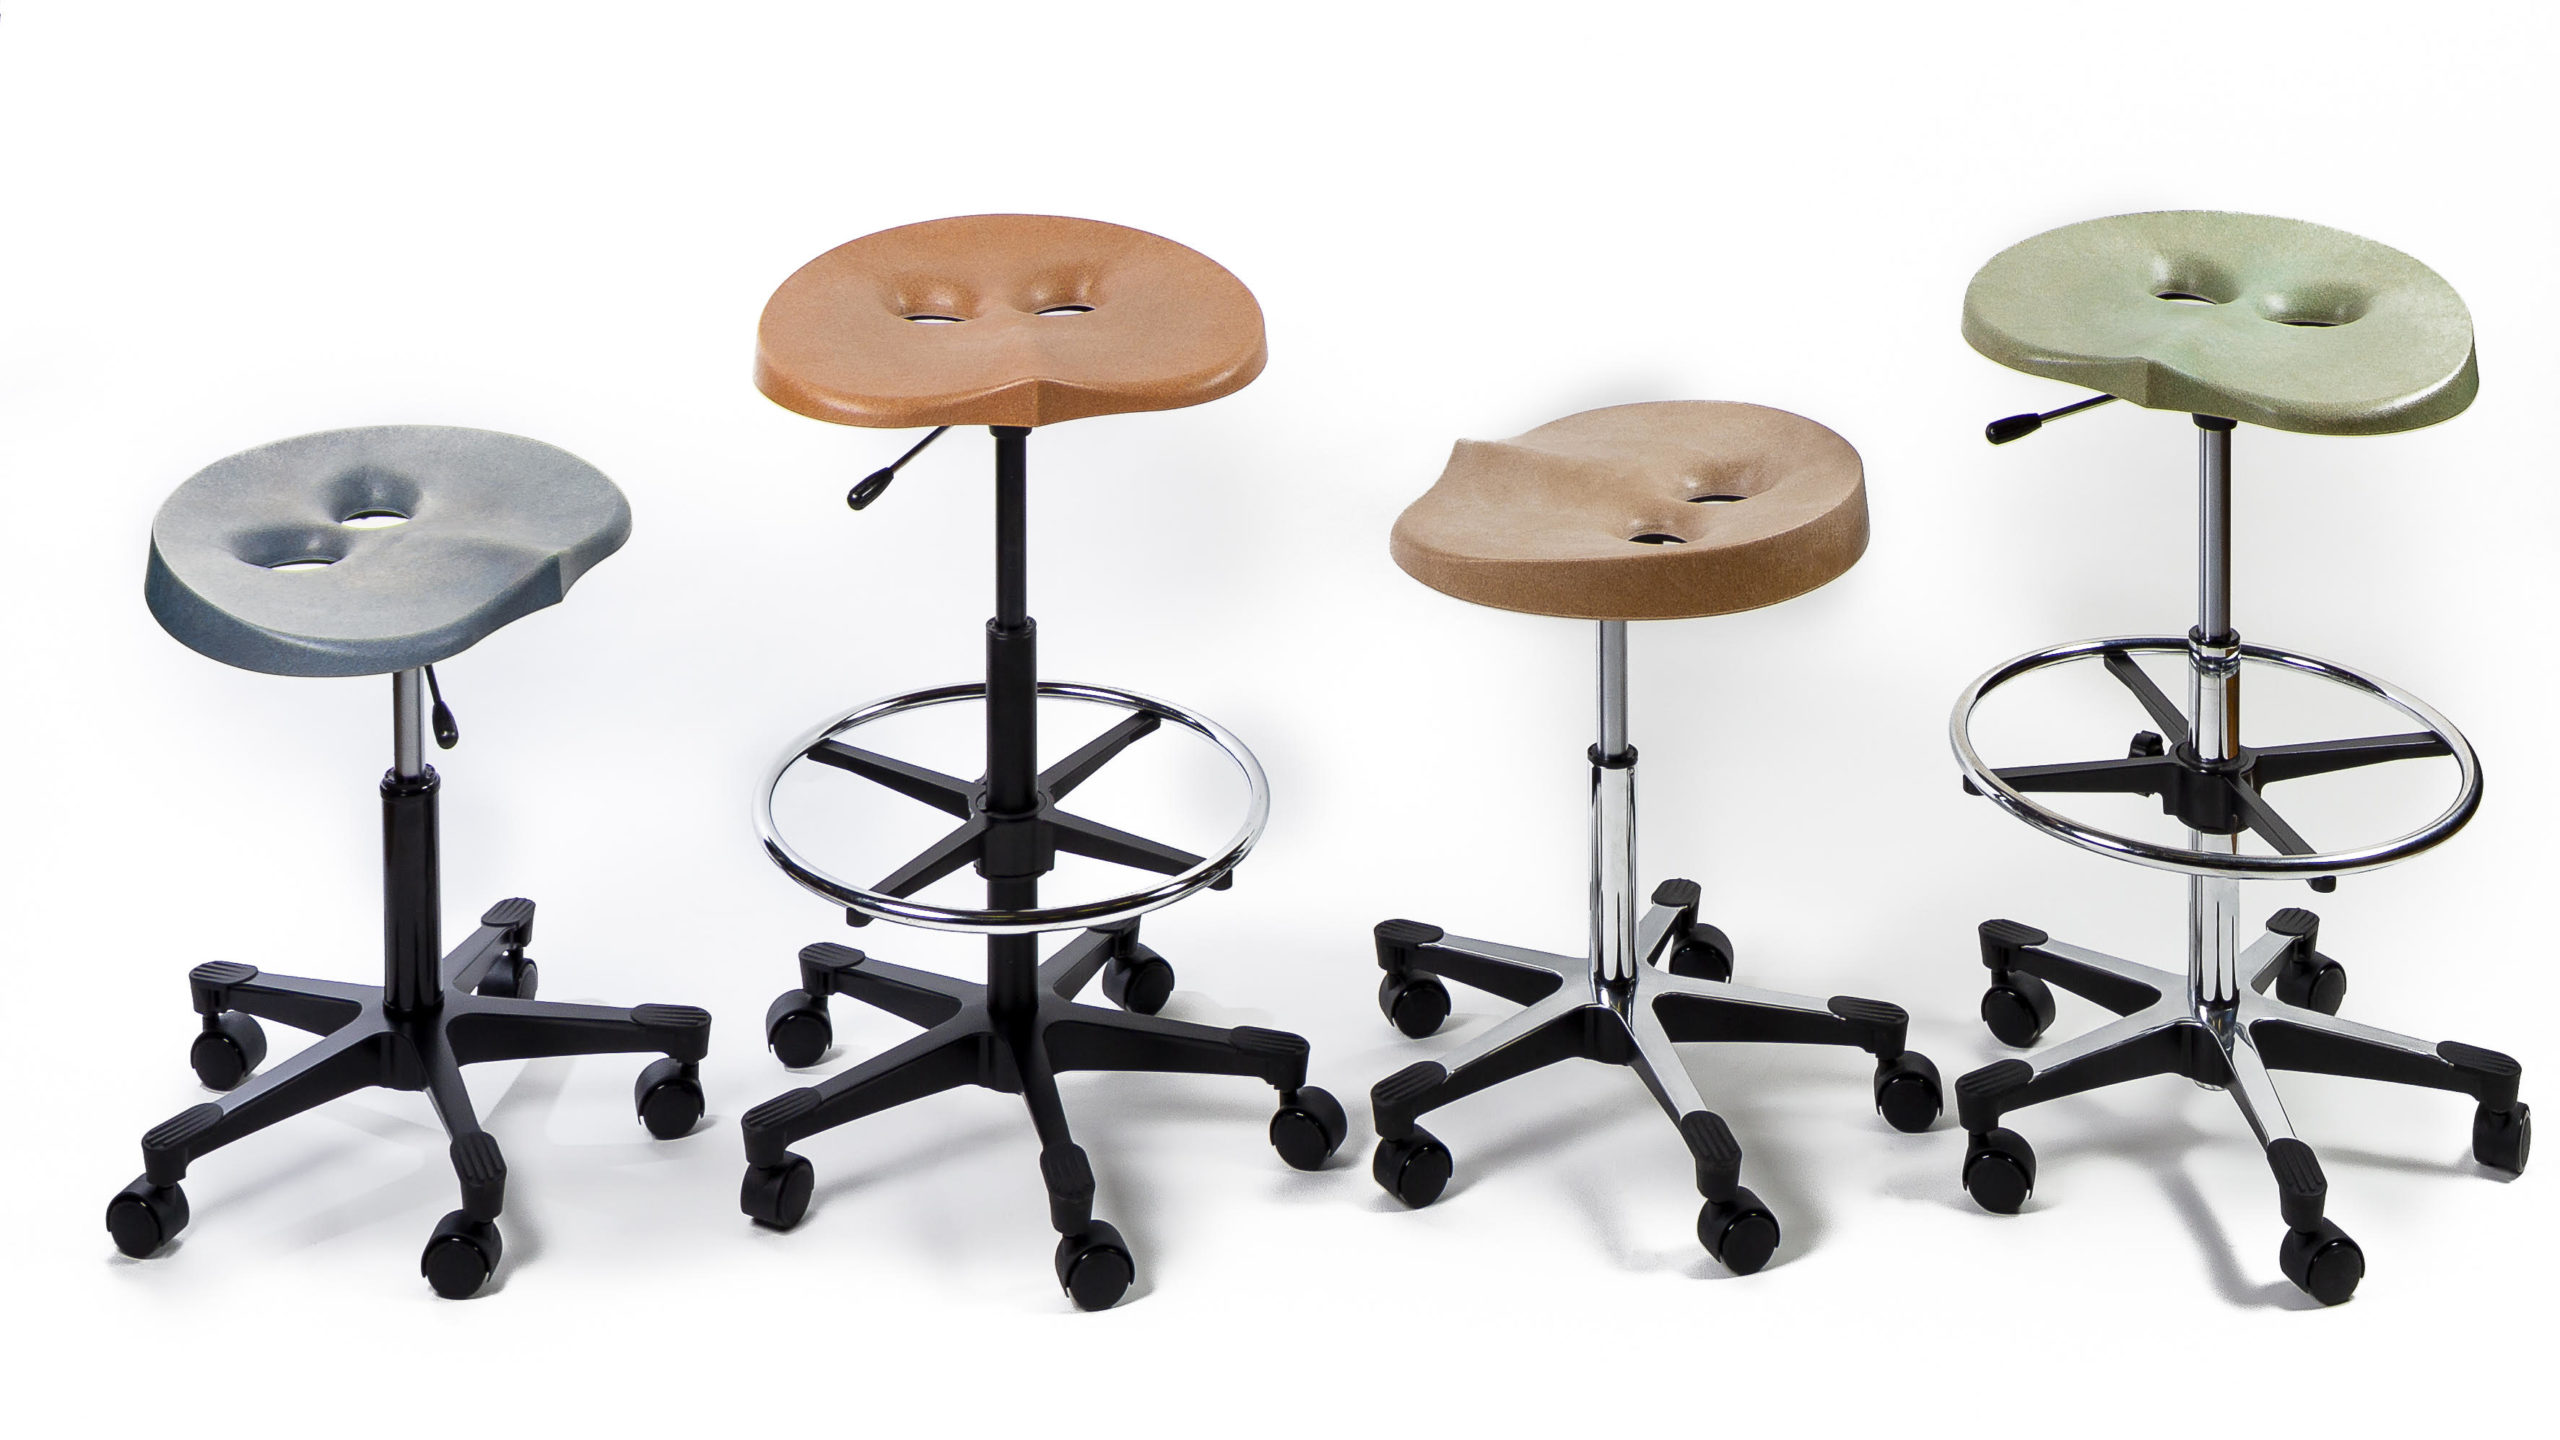 ErgoPro stools by Owl Furniture made with bioplastics